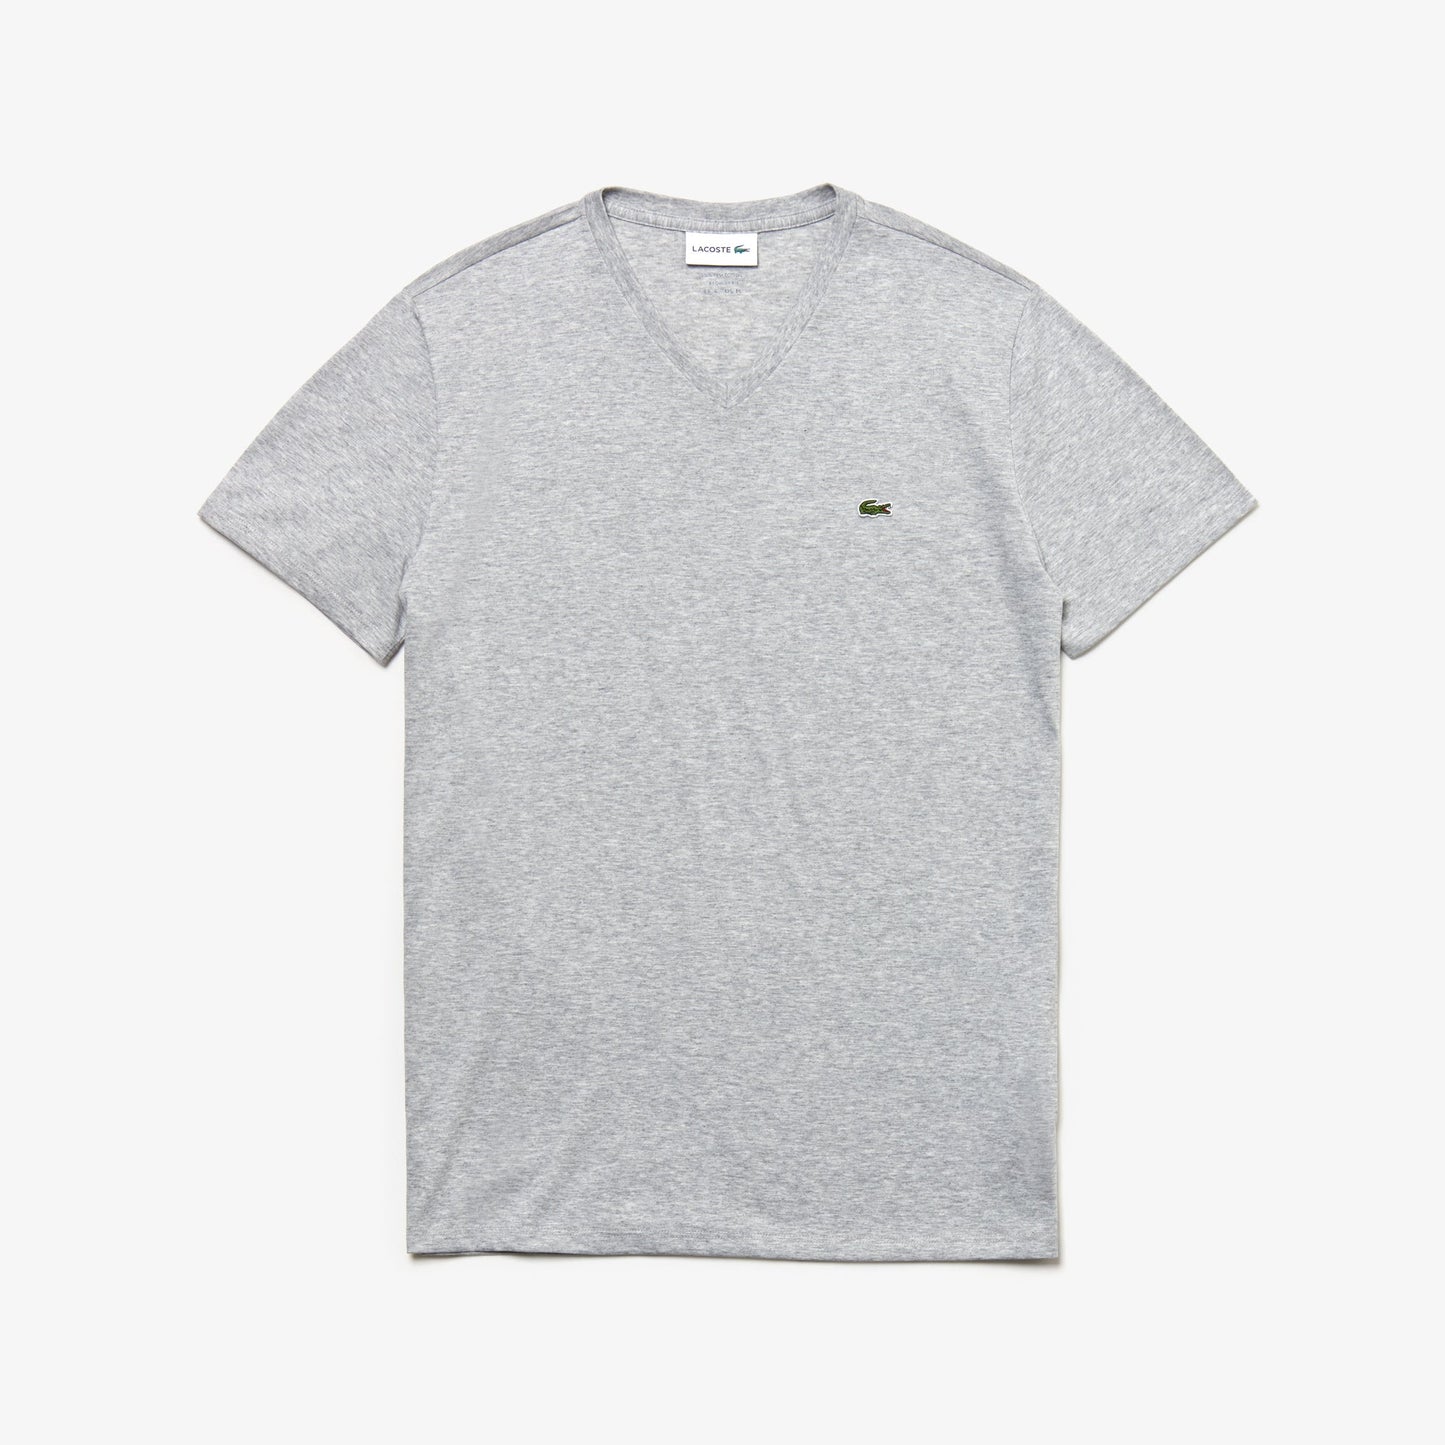 Men's V-neck Pima Cotton Jersey T-shirt - TH6710